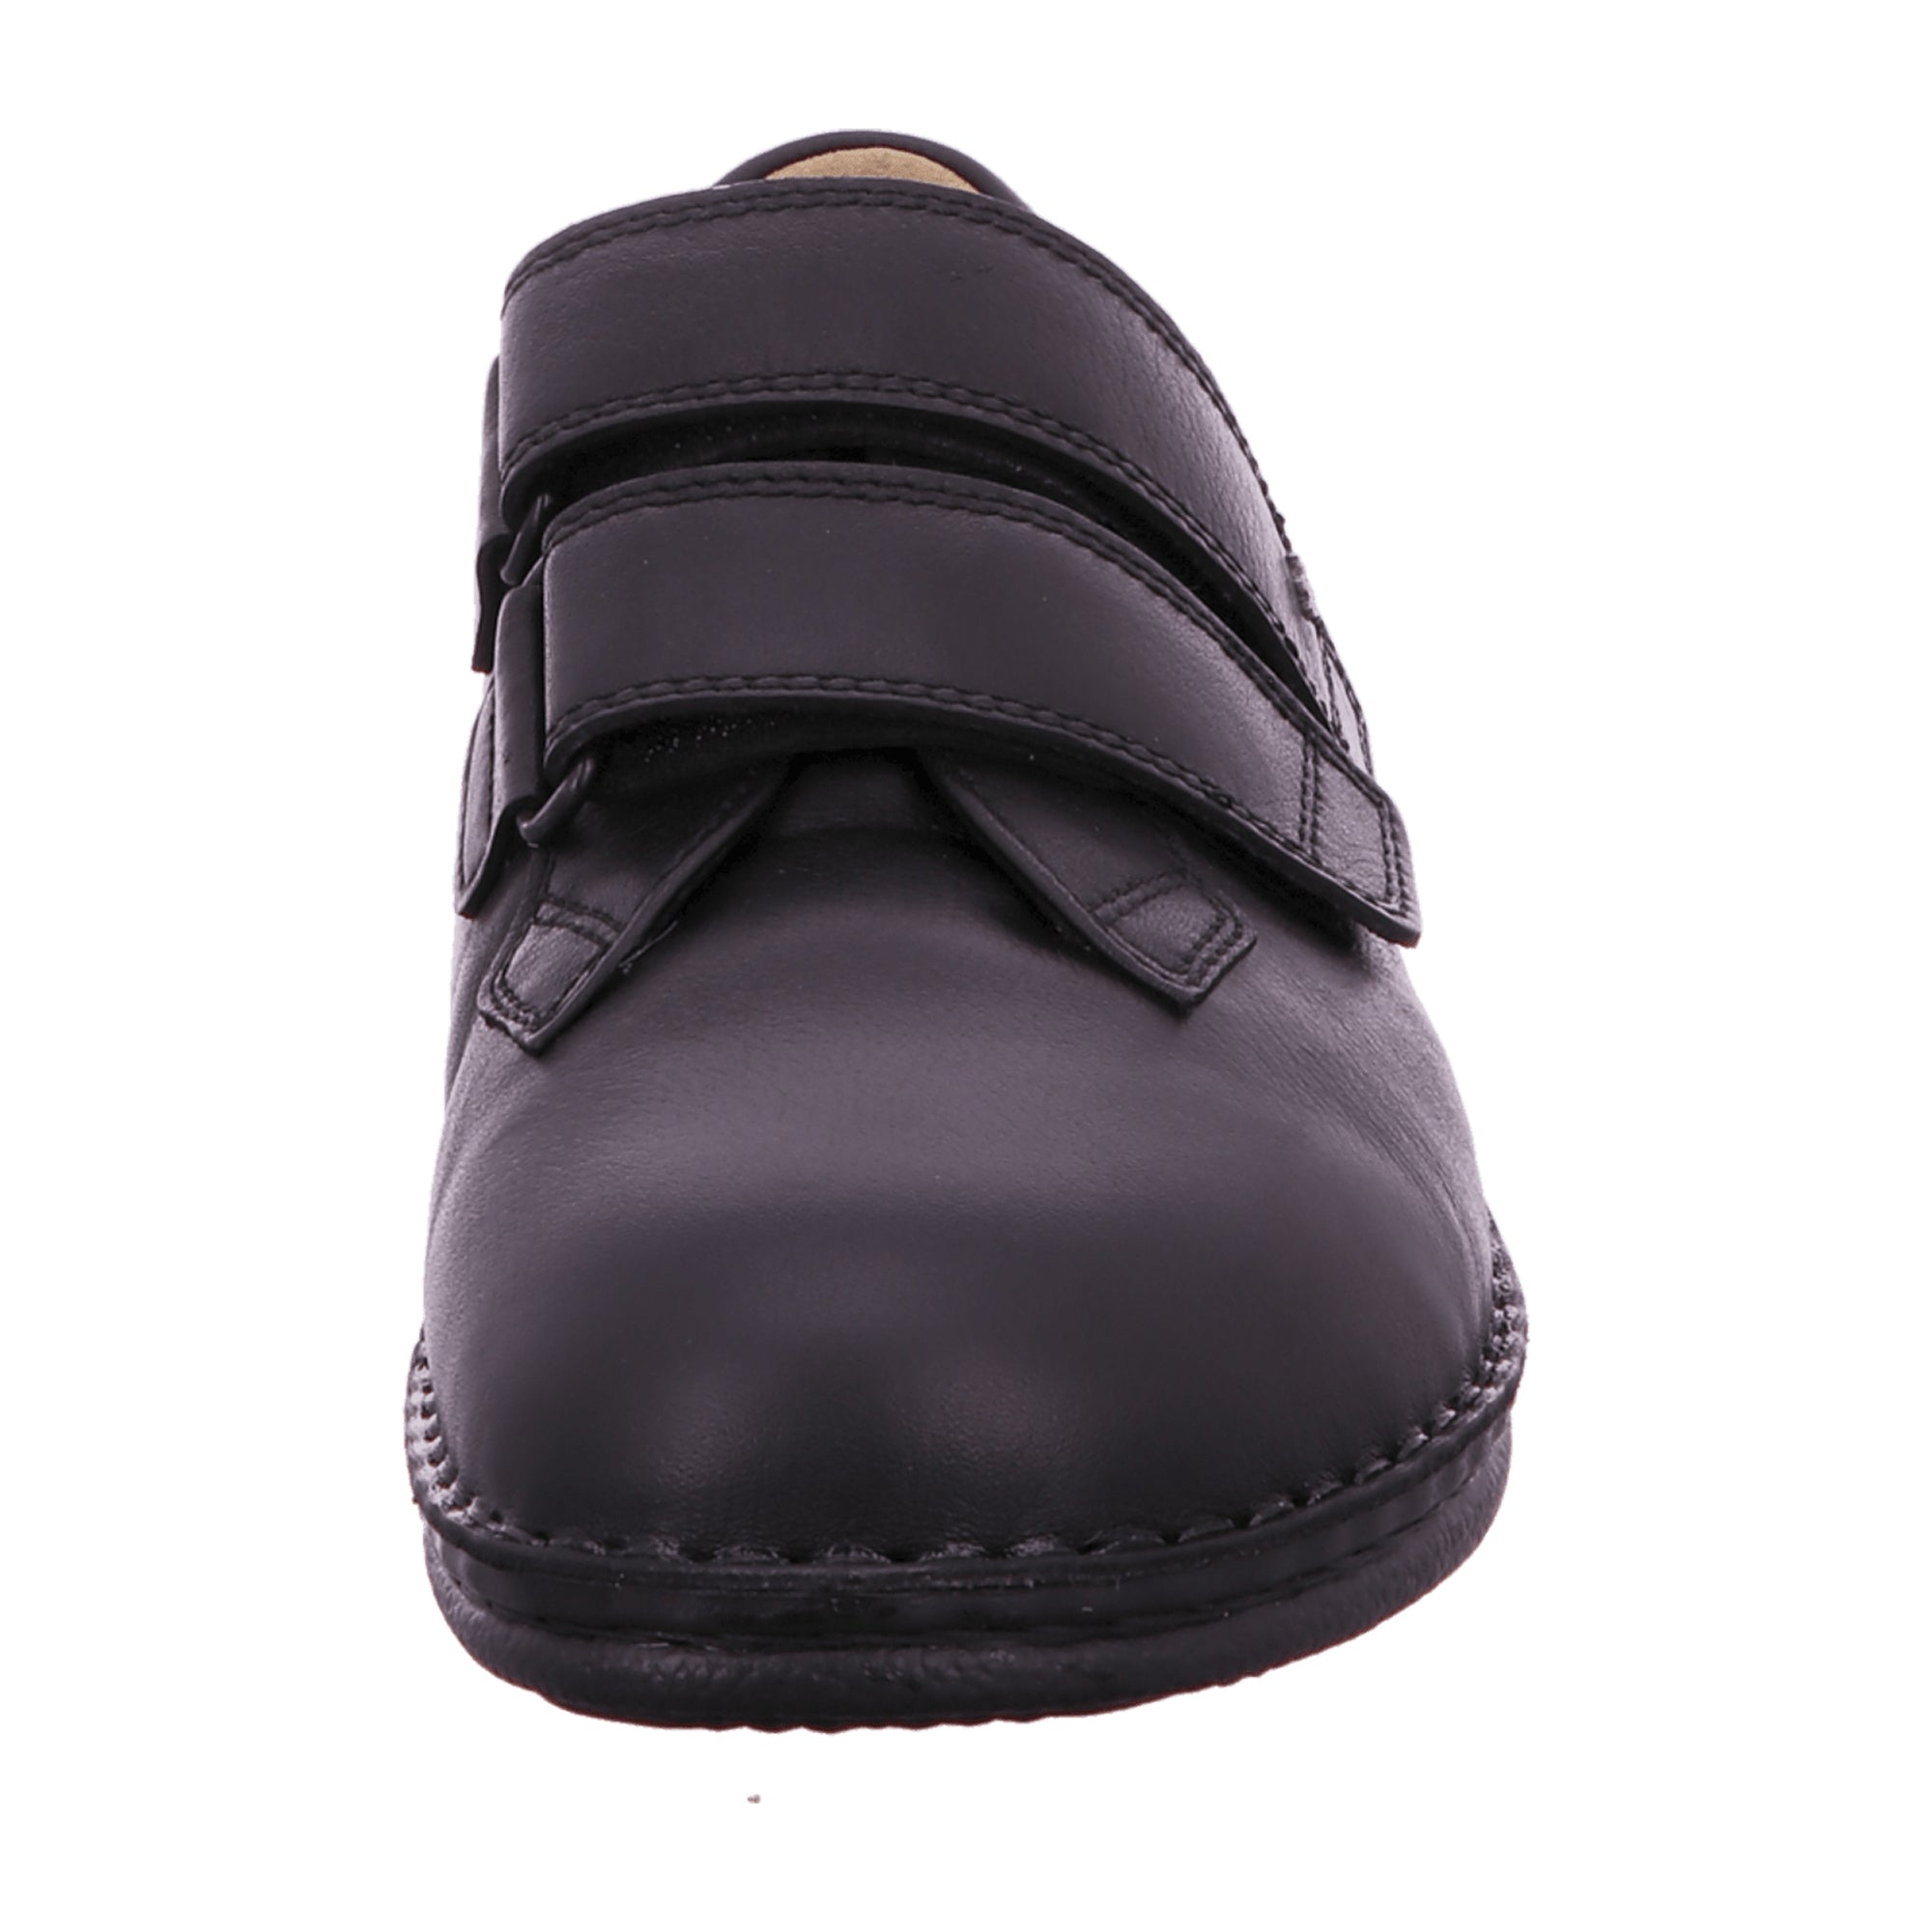 Finn Comfort Sponarind Men's Black Leather Shoes - Durable & Stylish